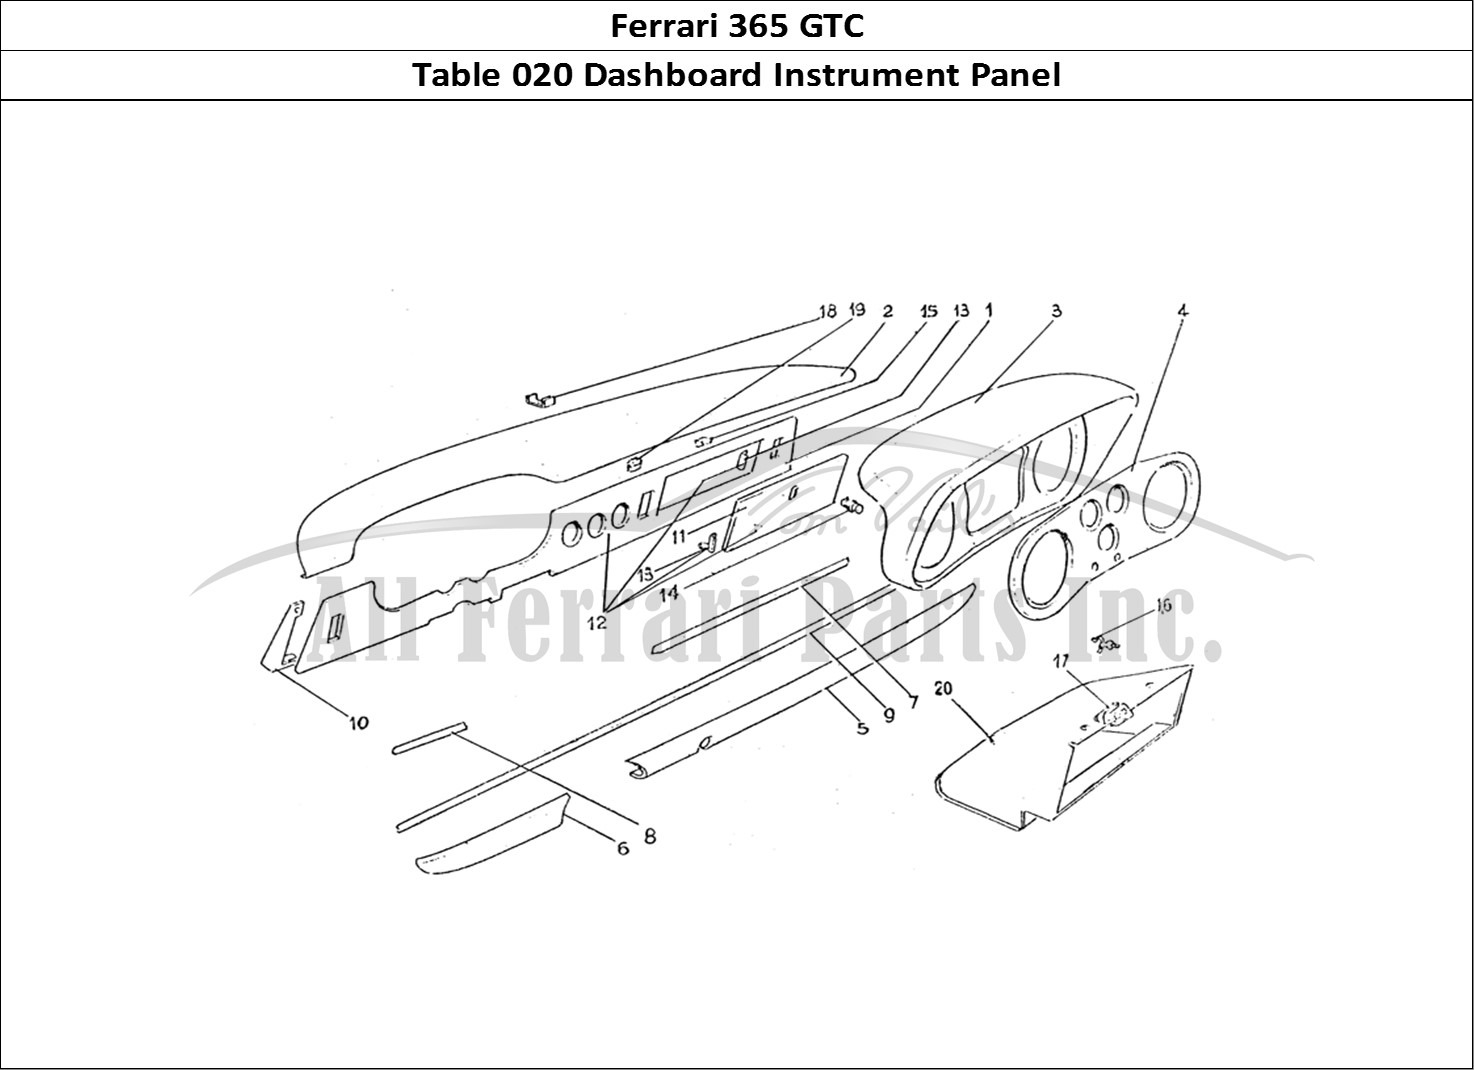 Ferrari Parts Ferrari 330 GTC (Coachwork) Page 020 Dash board